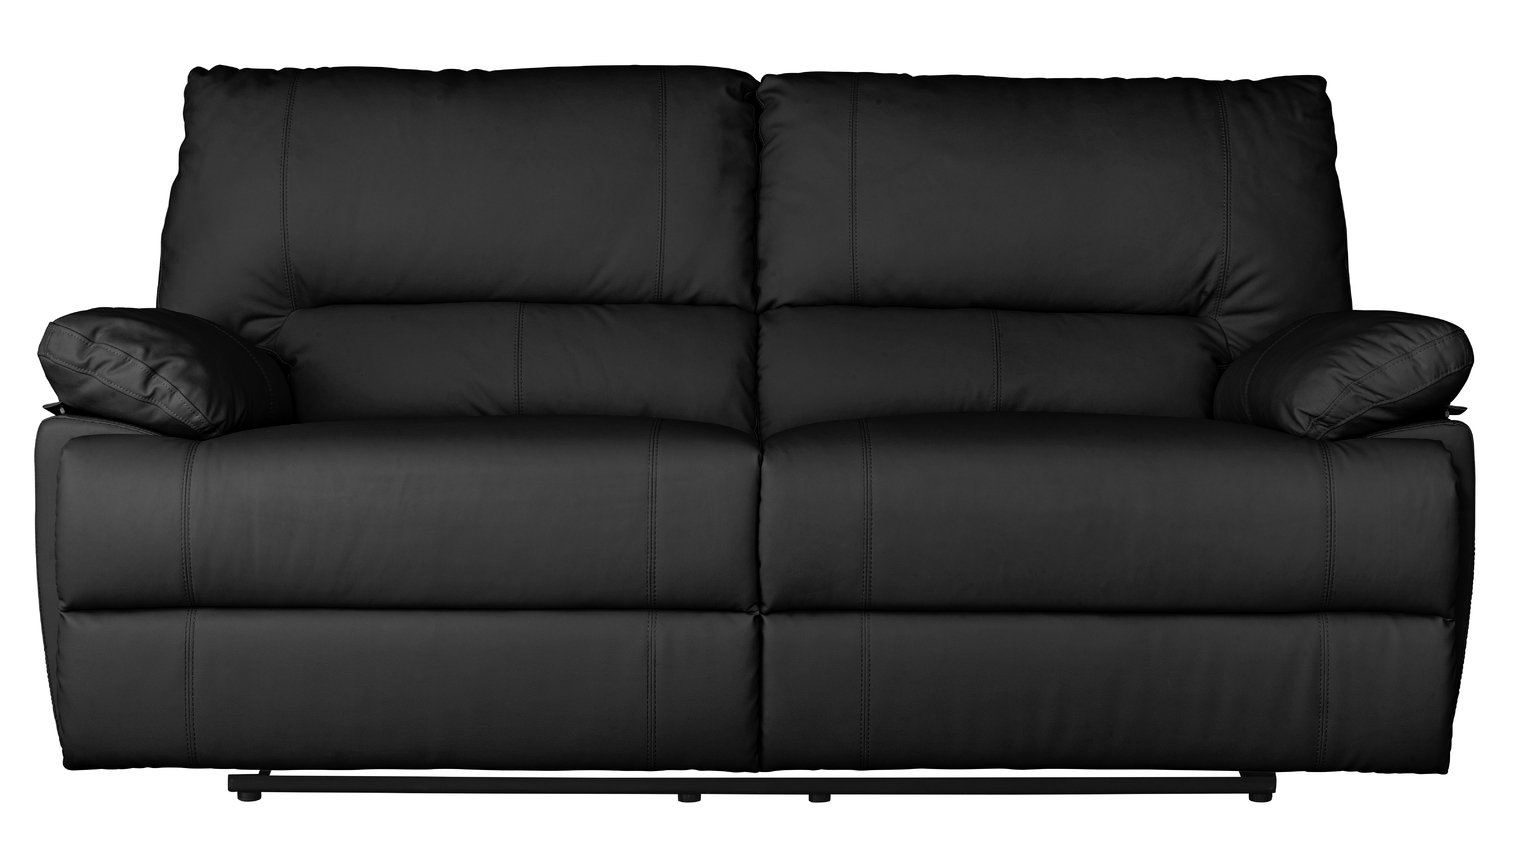 Argos Home Devlin 3 Seater Faux Leather Recliner Sofa -Black